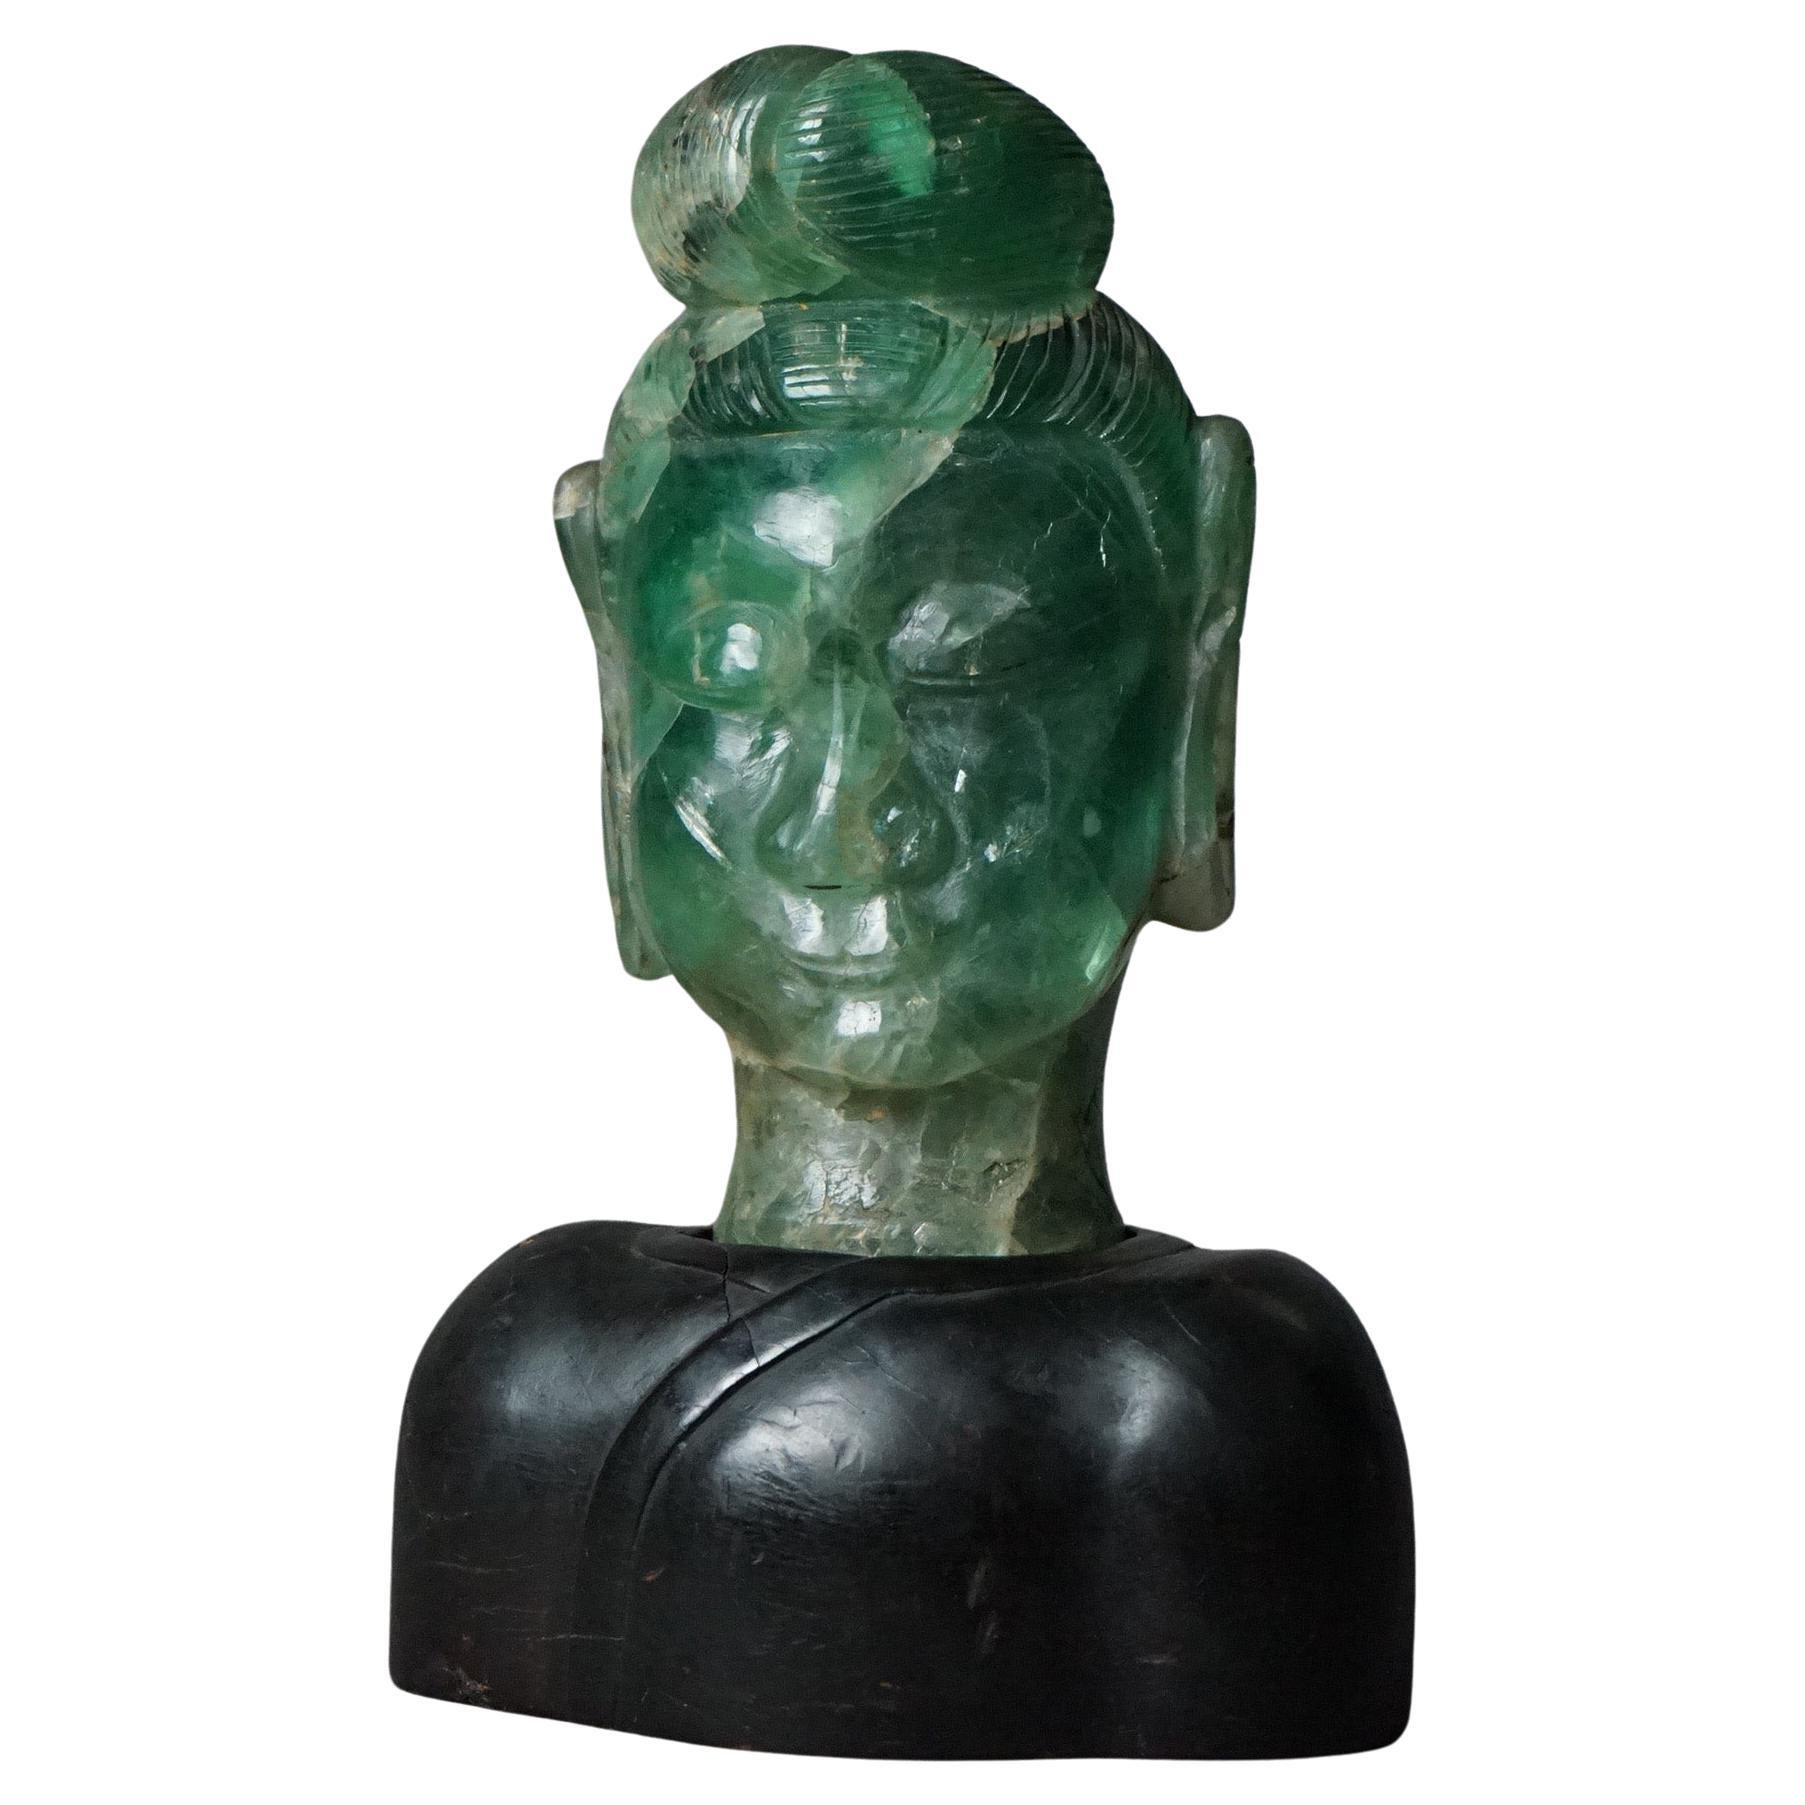 Antique Asian Jade Quartz Buddha Head Sculpture With Hardwood Base c1920